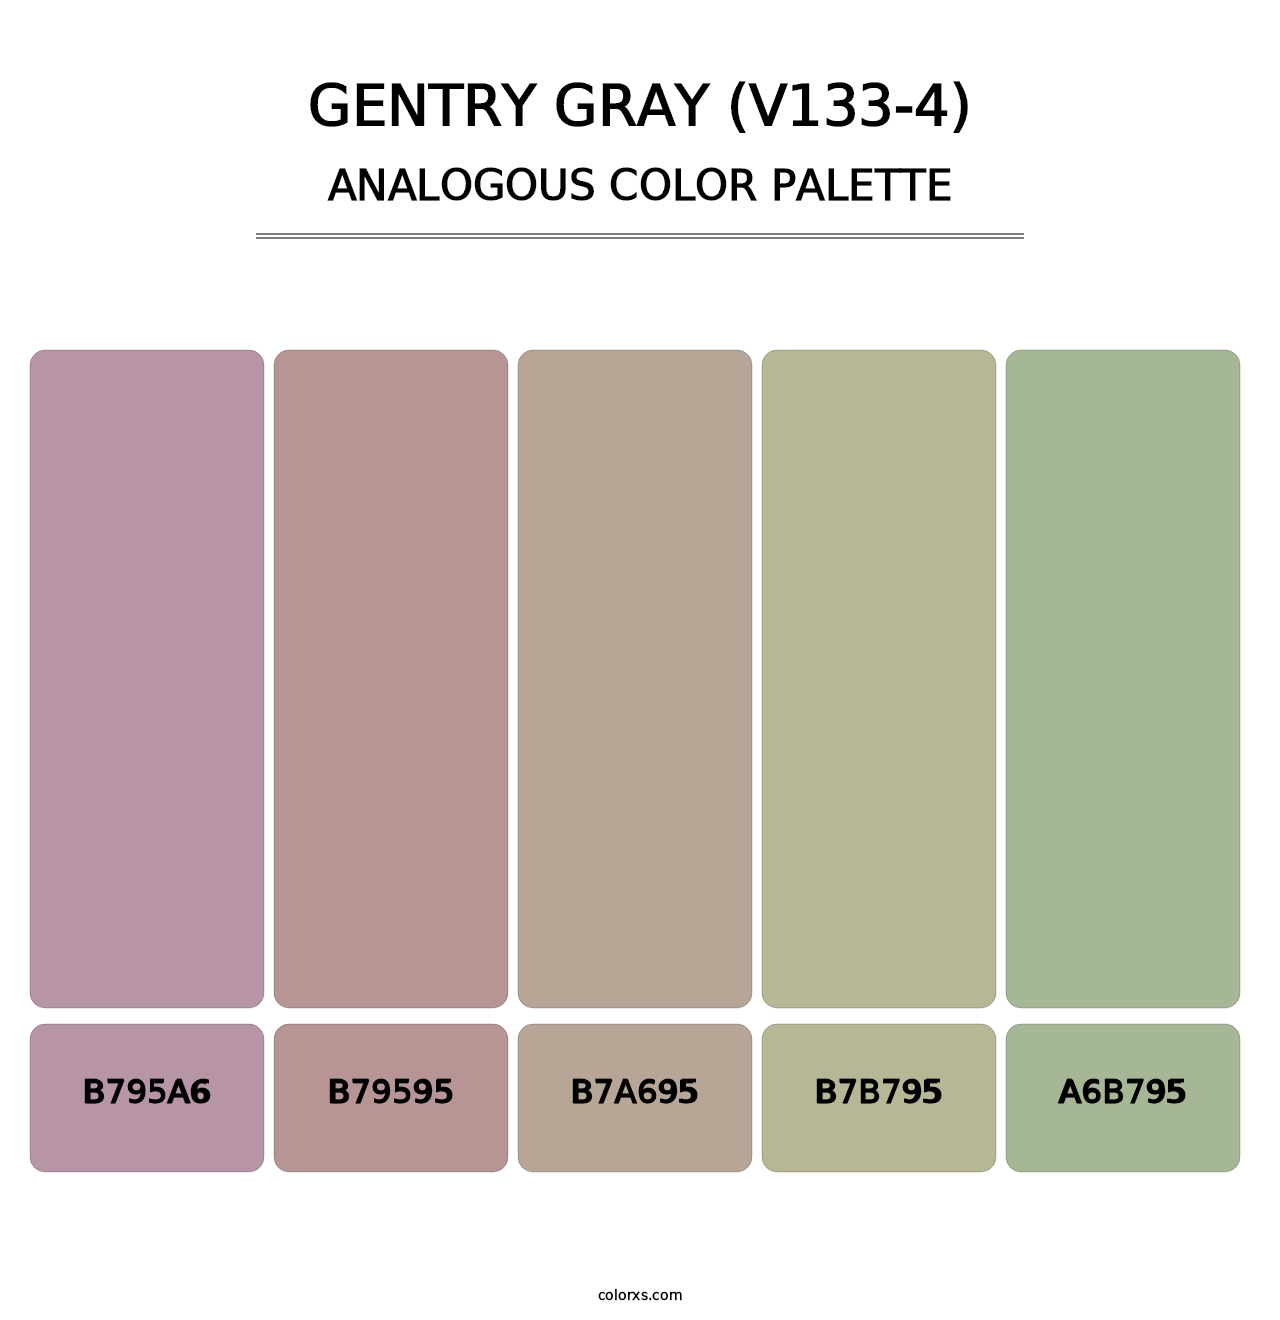 Gentry Gray (V133-4) - Analogous Color Palette